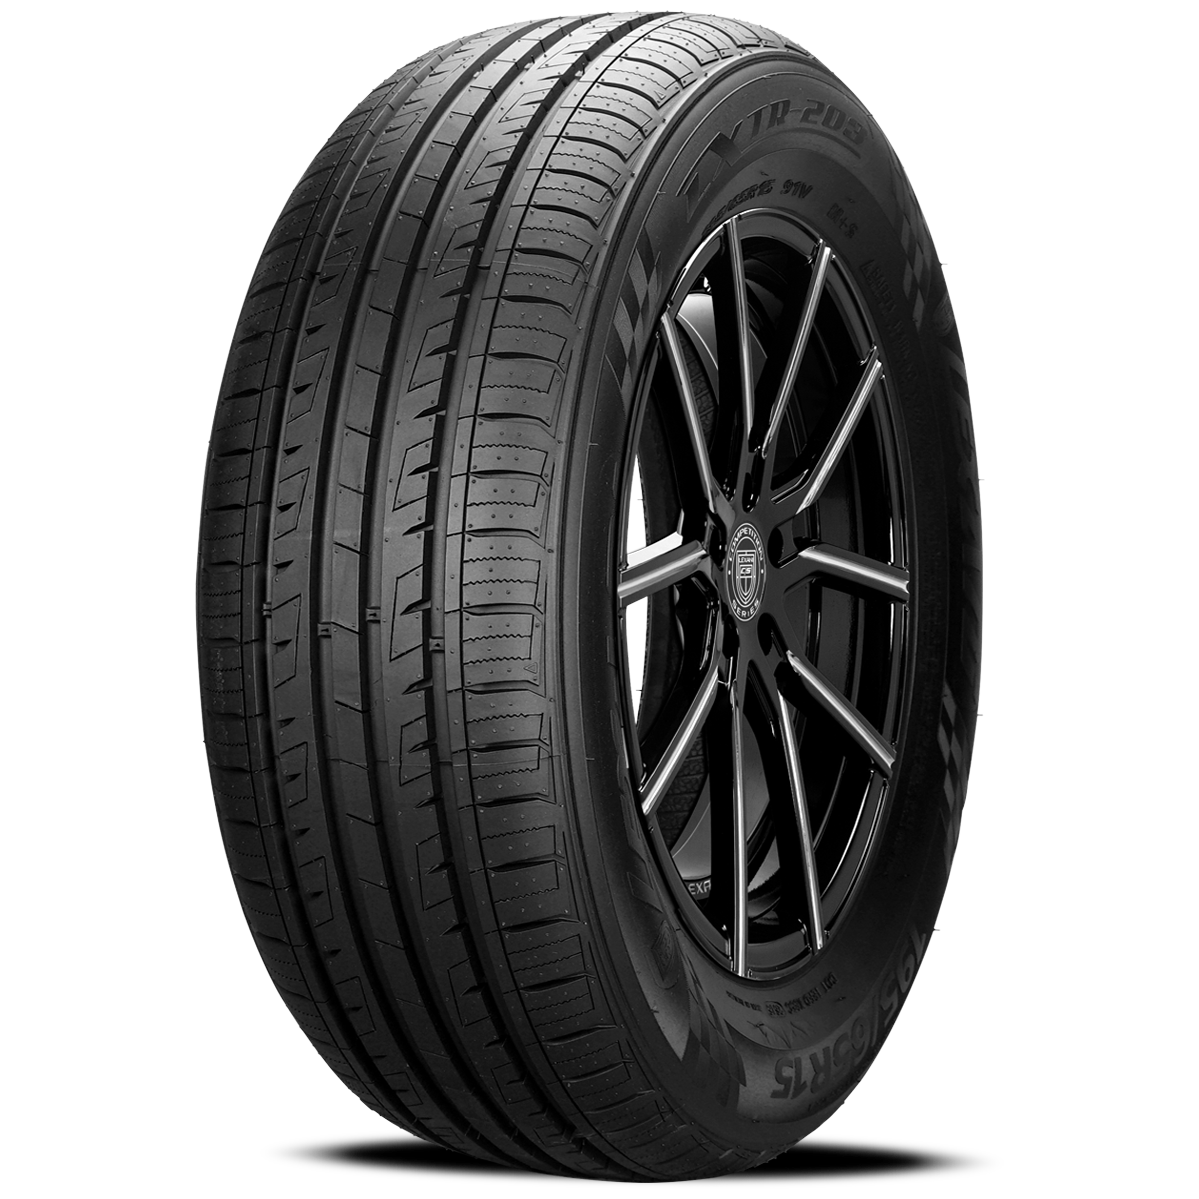 LEXANI LXTR-203 215/65R15 (26X8.5R 15) Tires